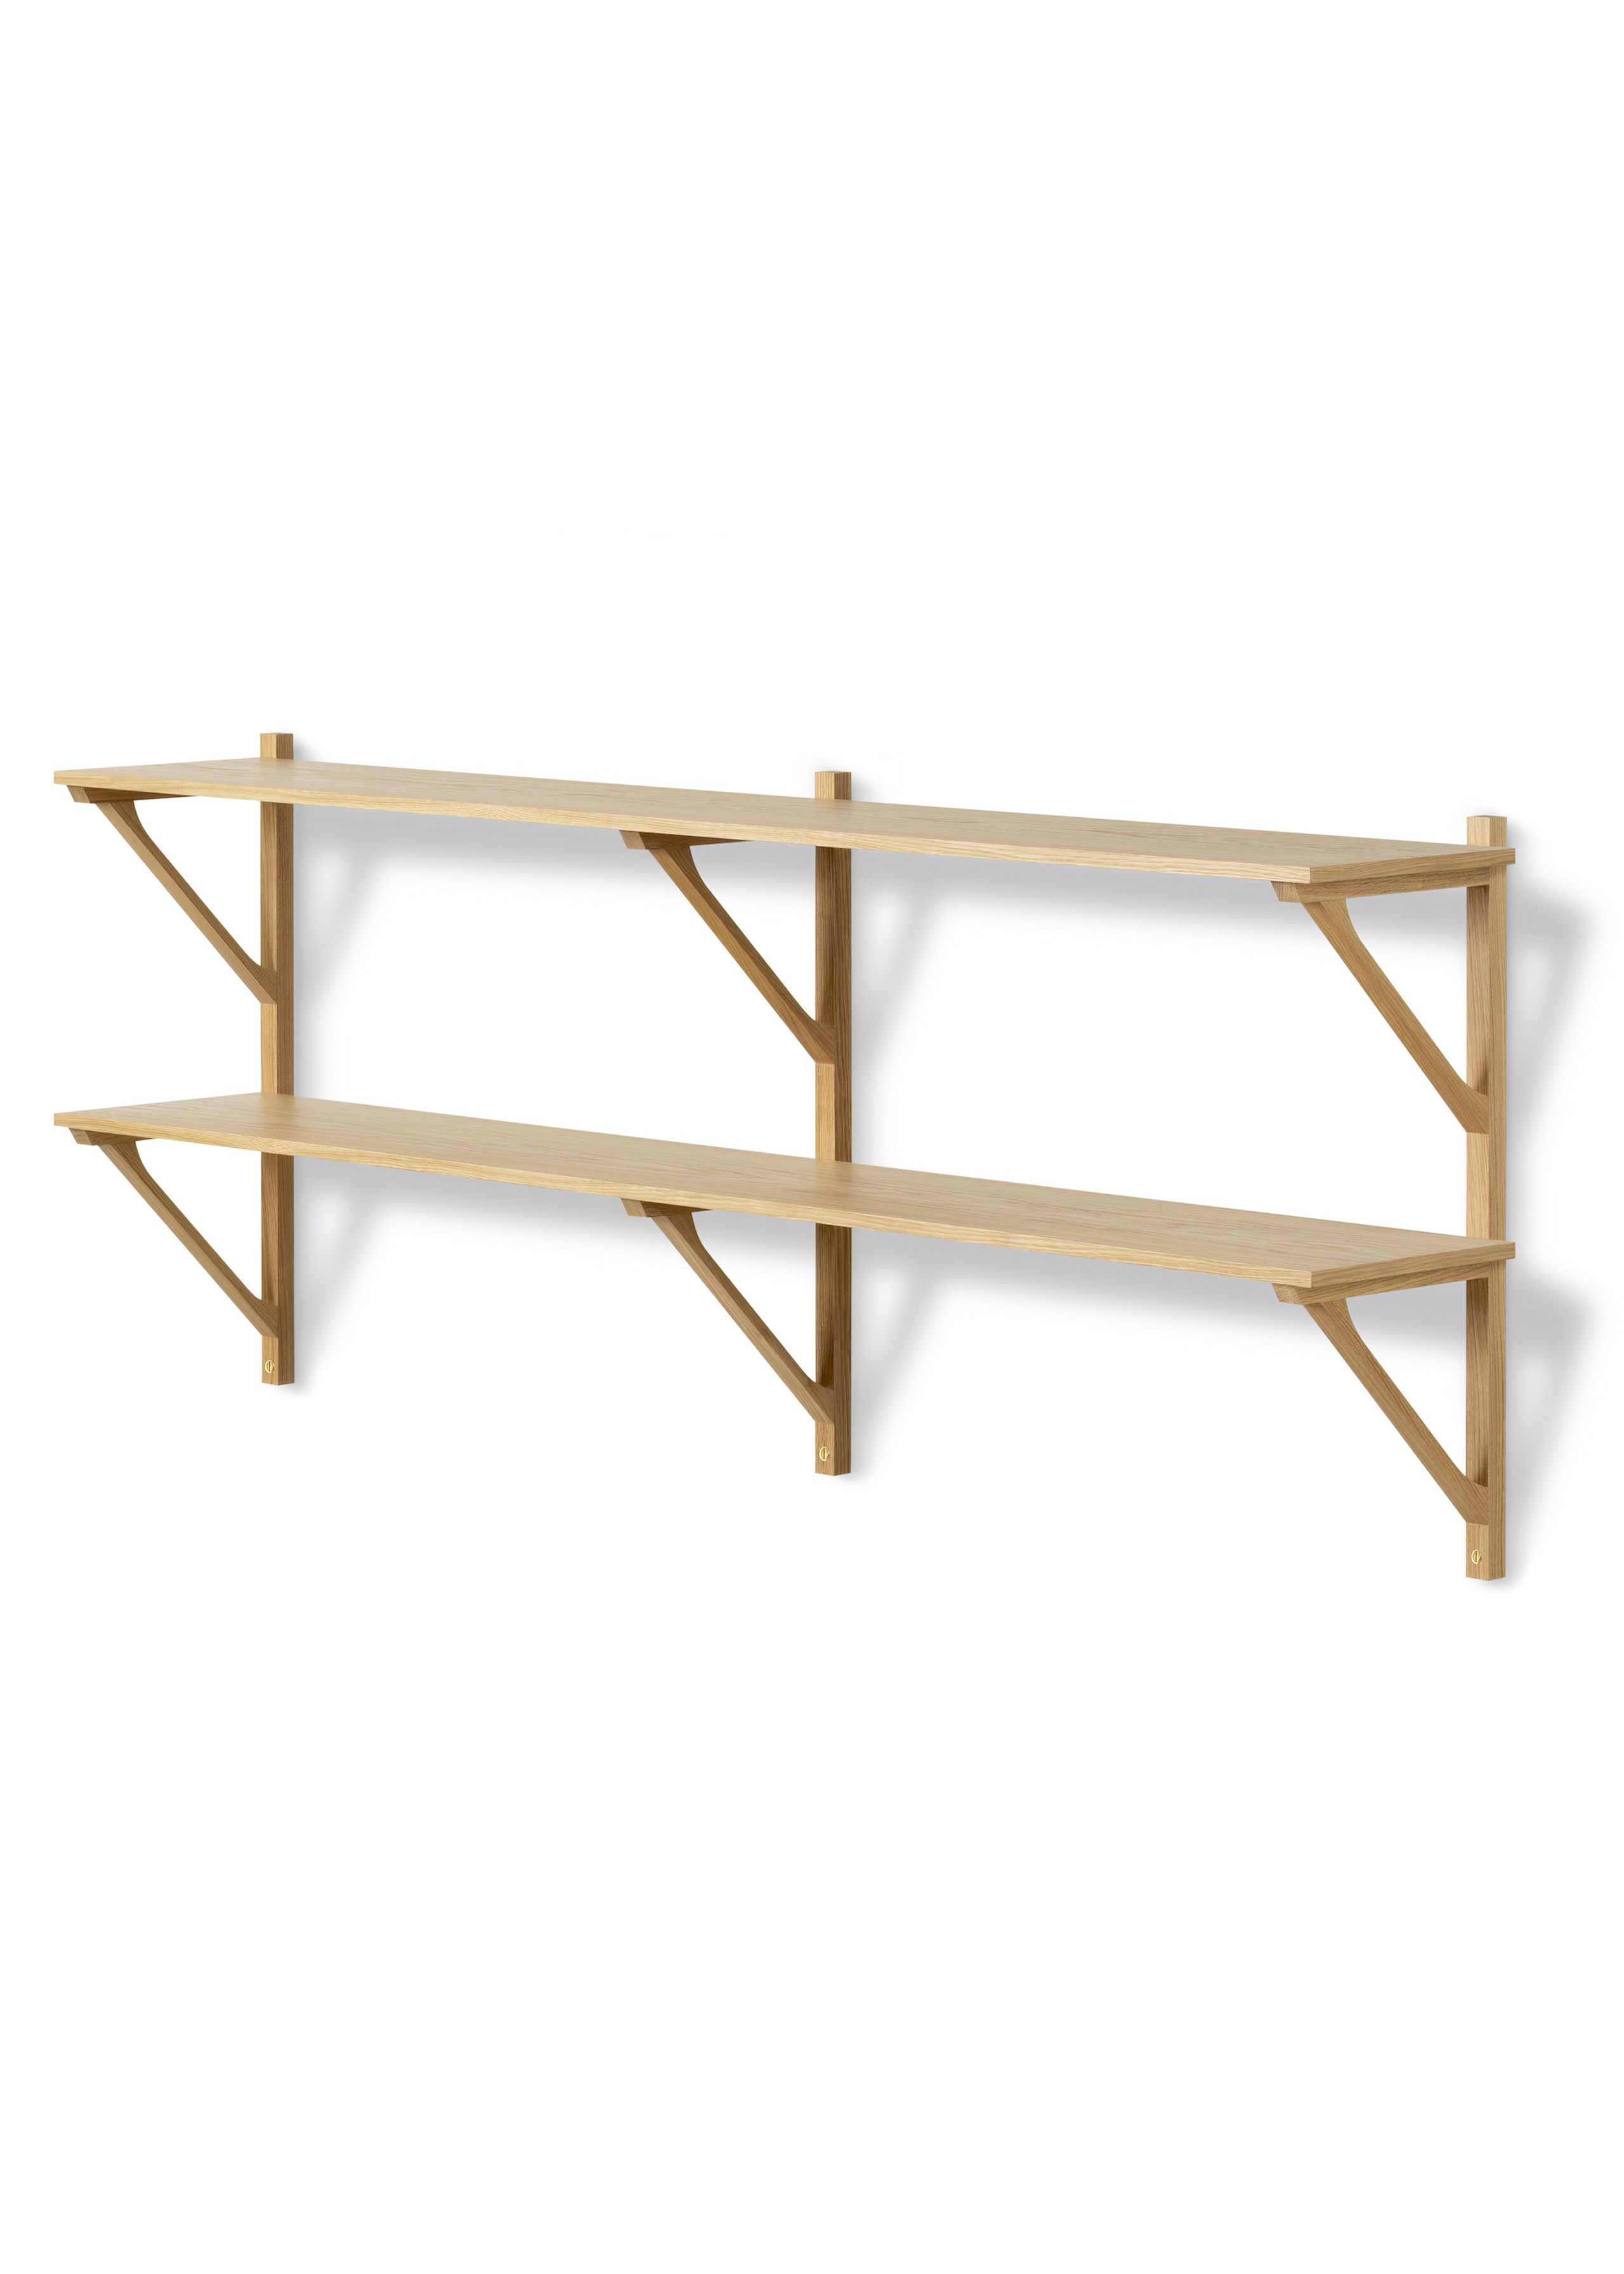 Fredericia Furniture - Prateleira - BM29 Shelf 2920 by Børge Mogensen - Lacquered Oak